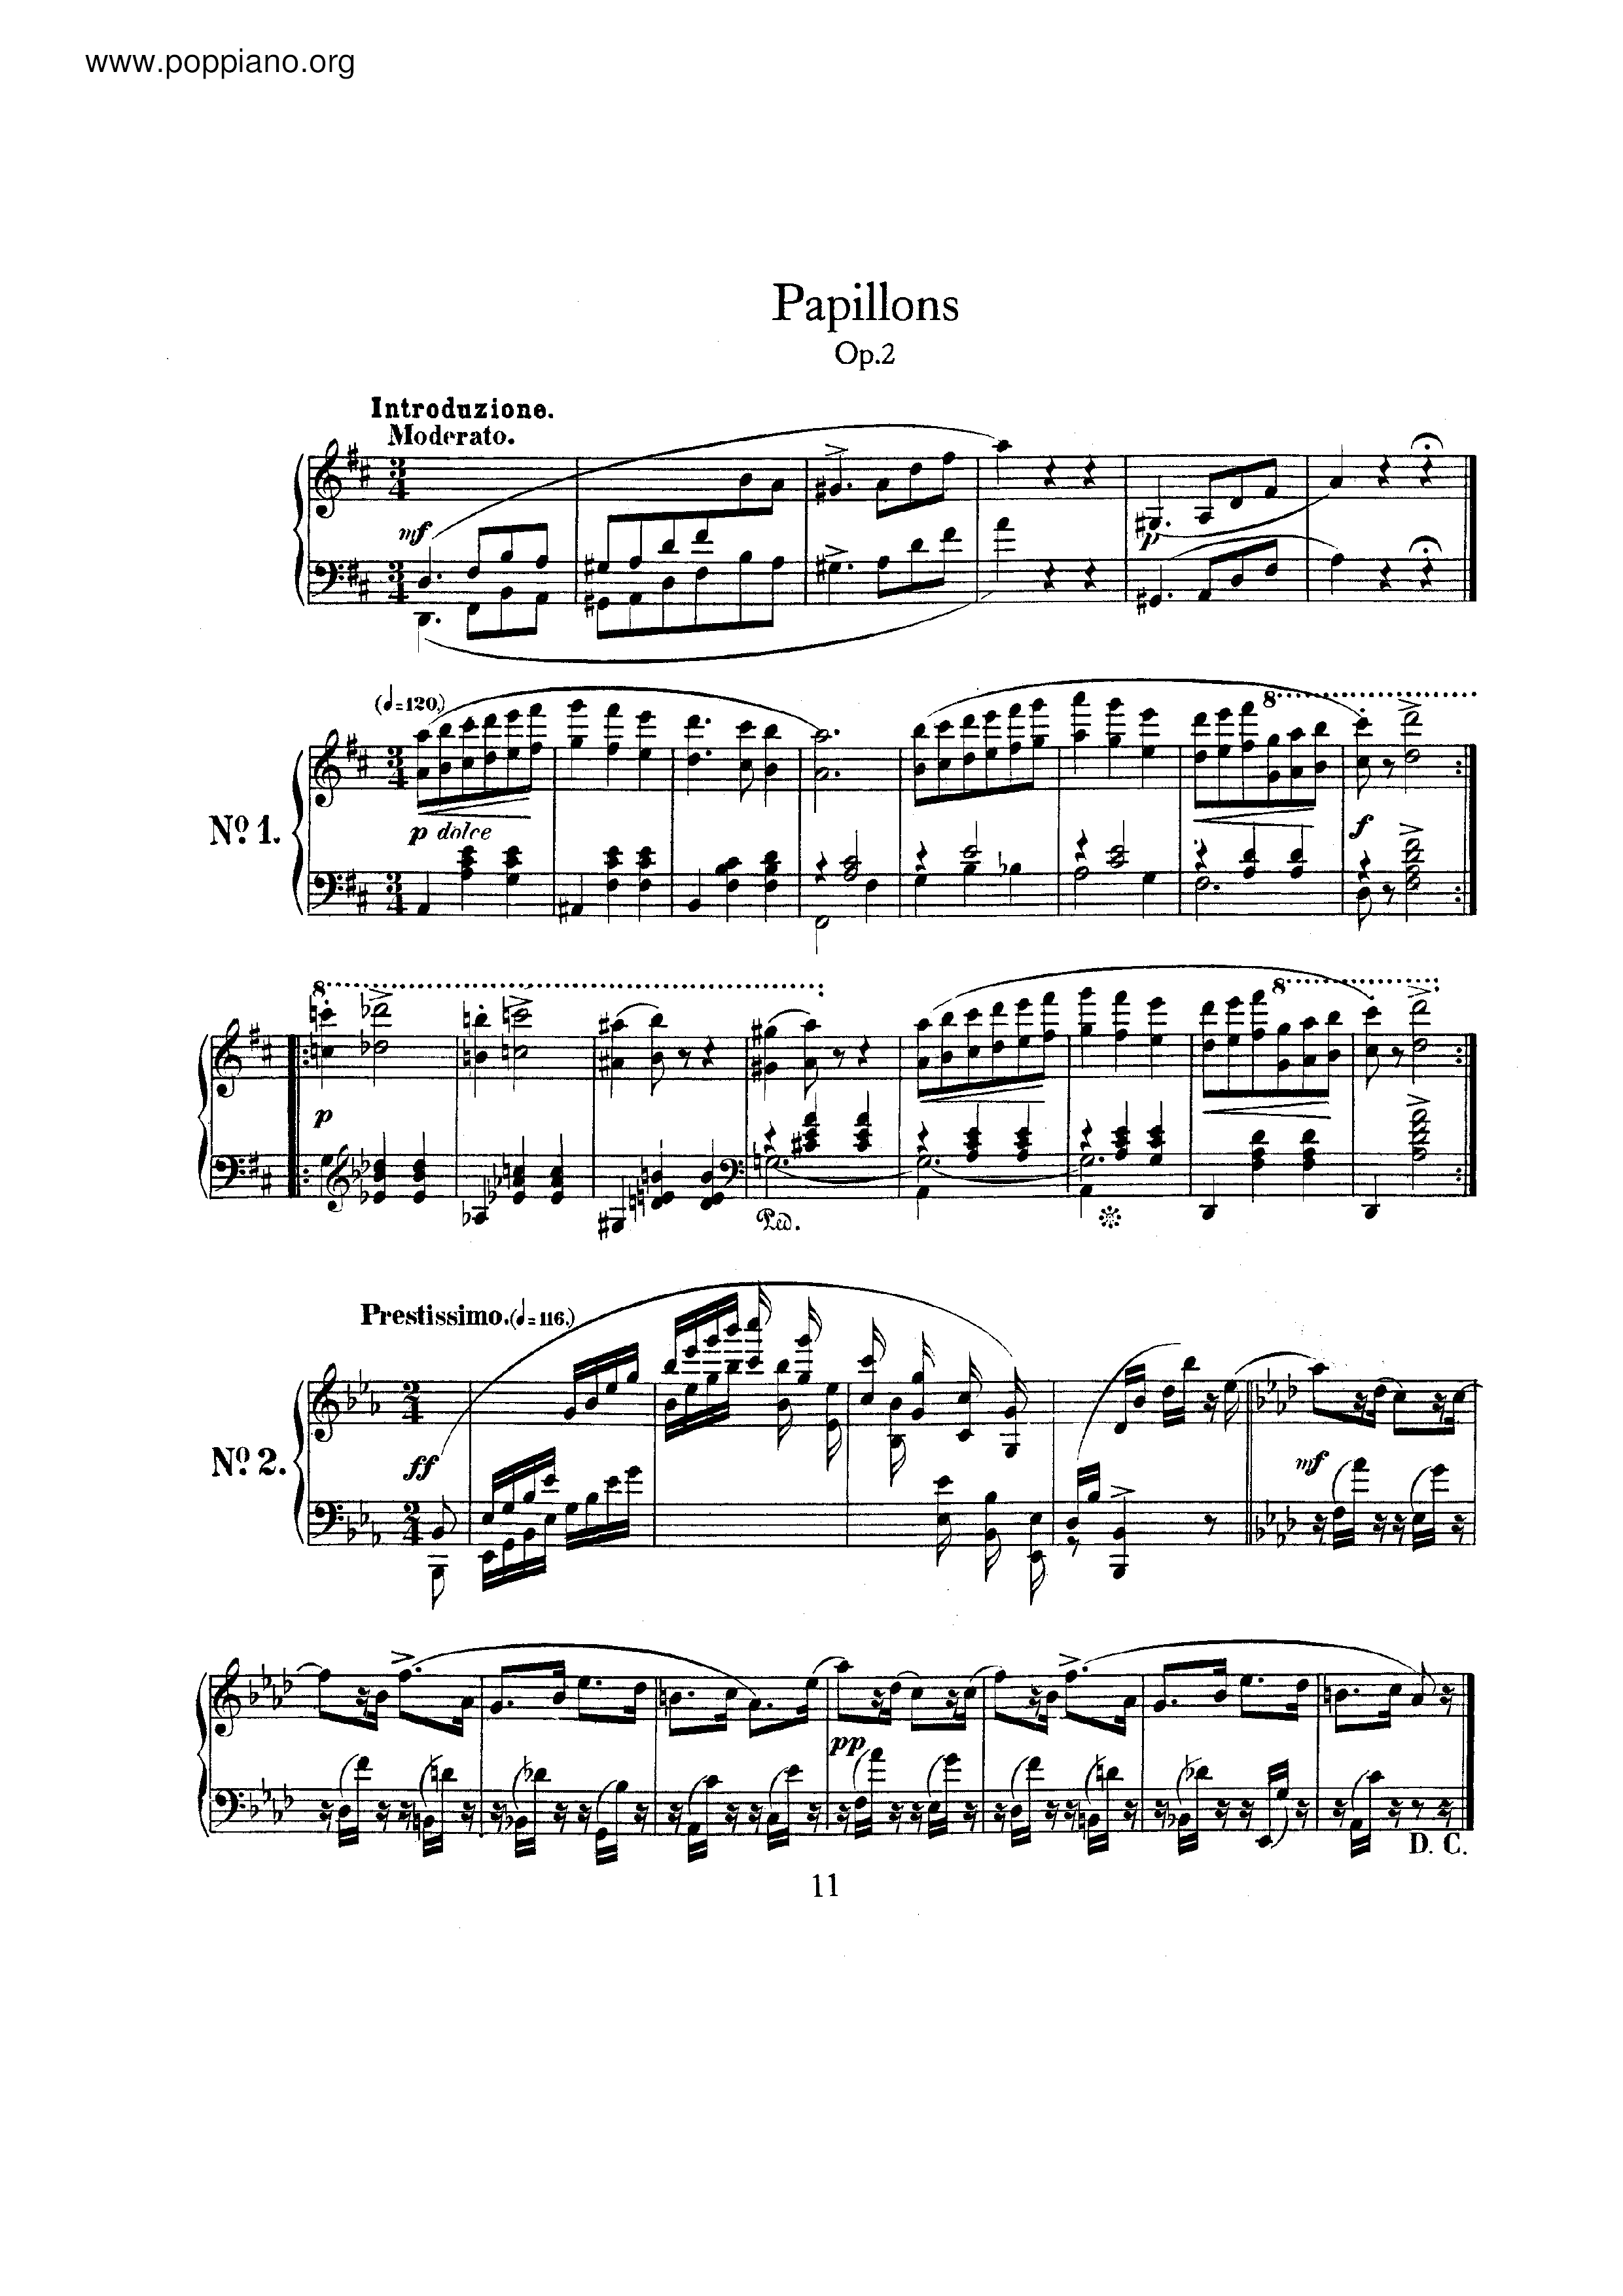 Papillons, Op.2 Score